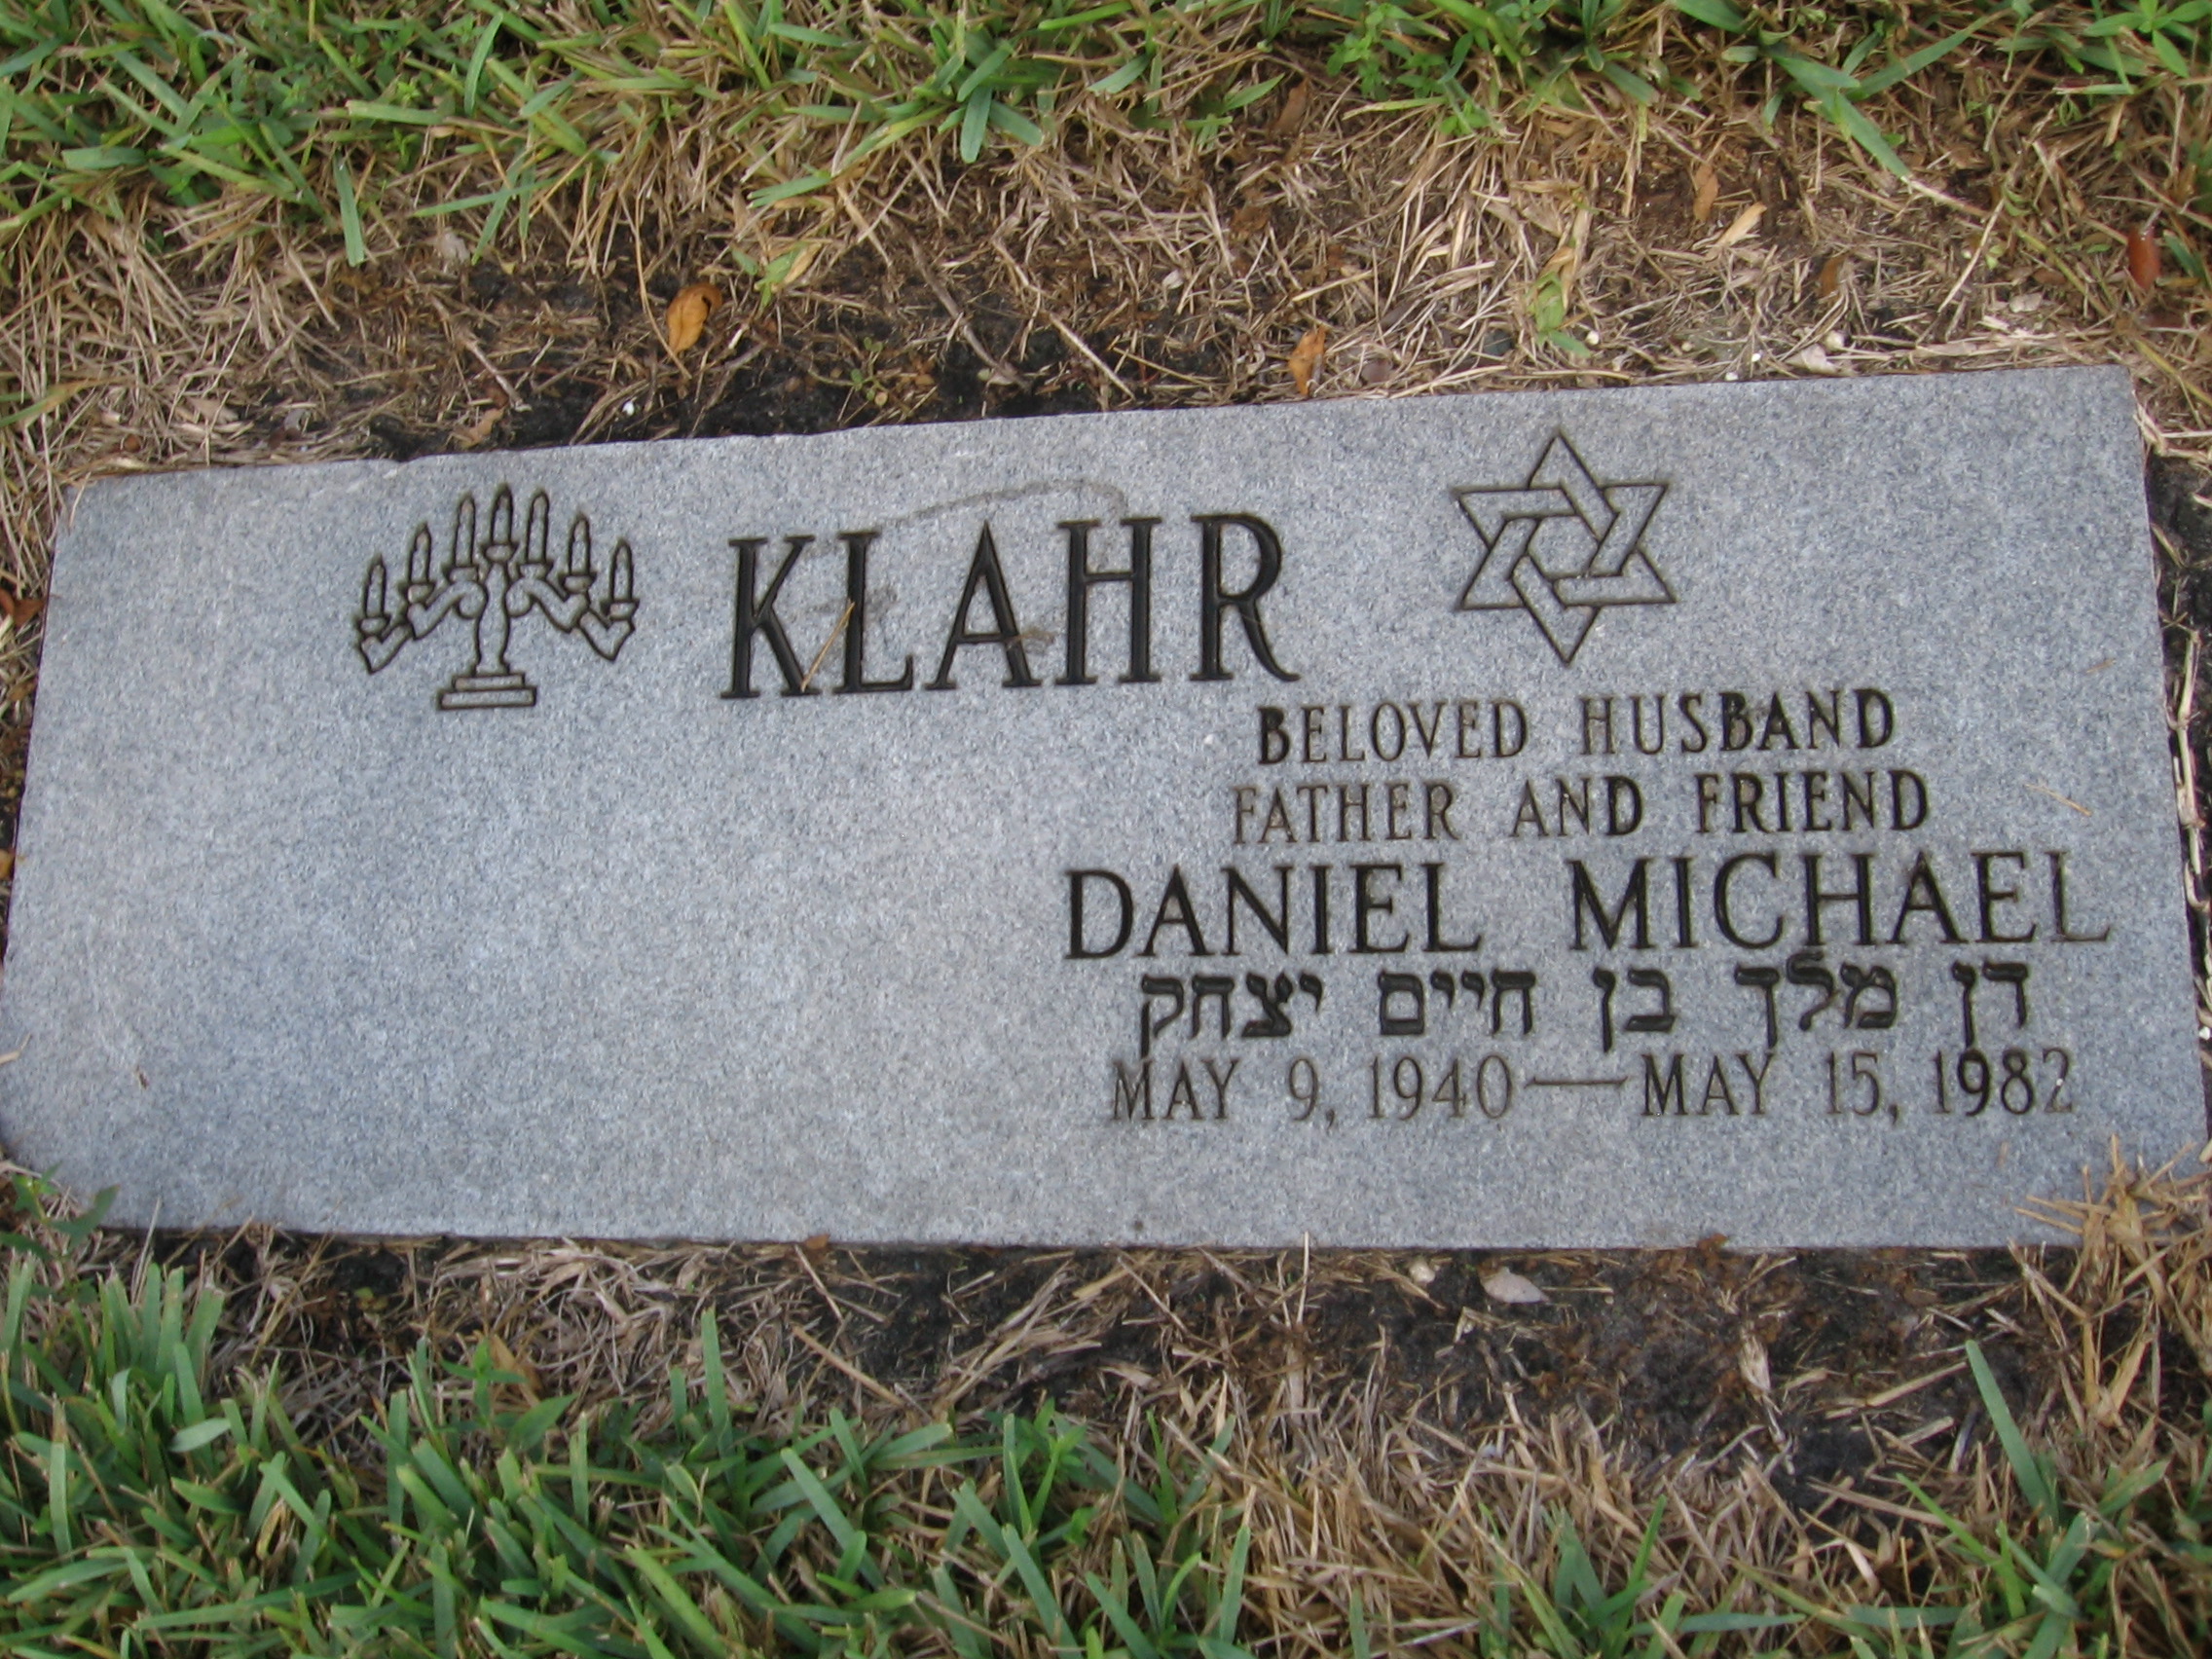 Daniel Michael Klahr